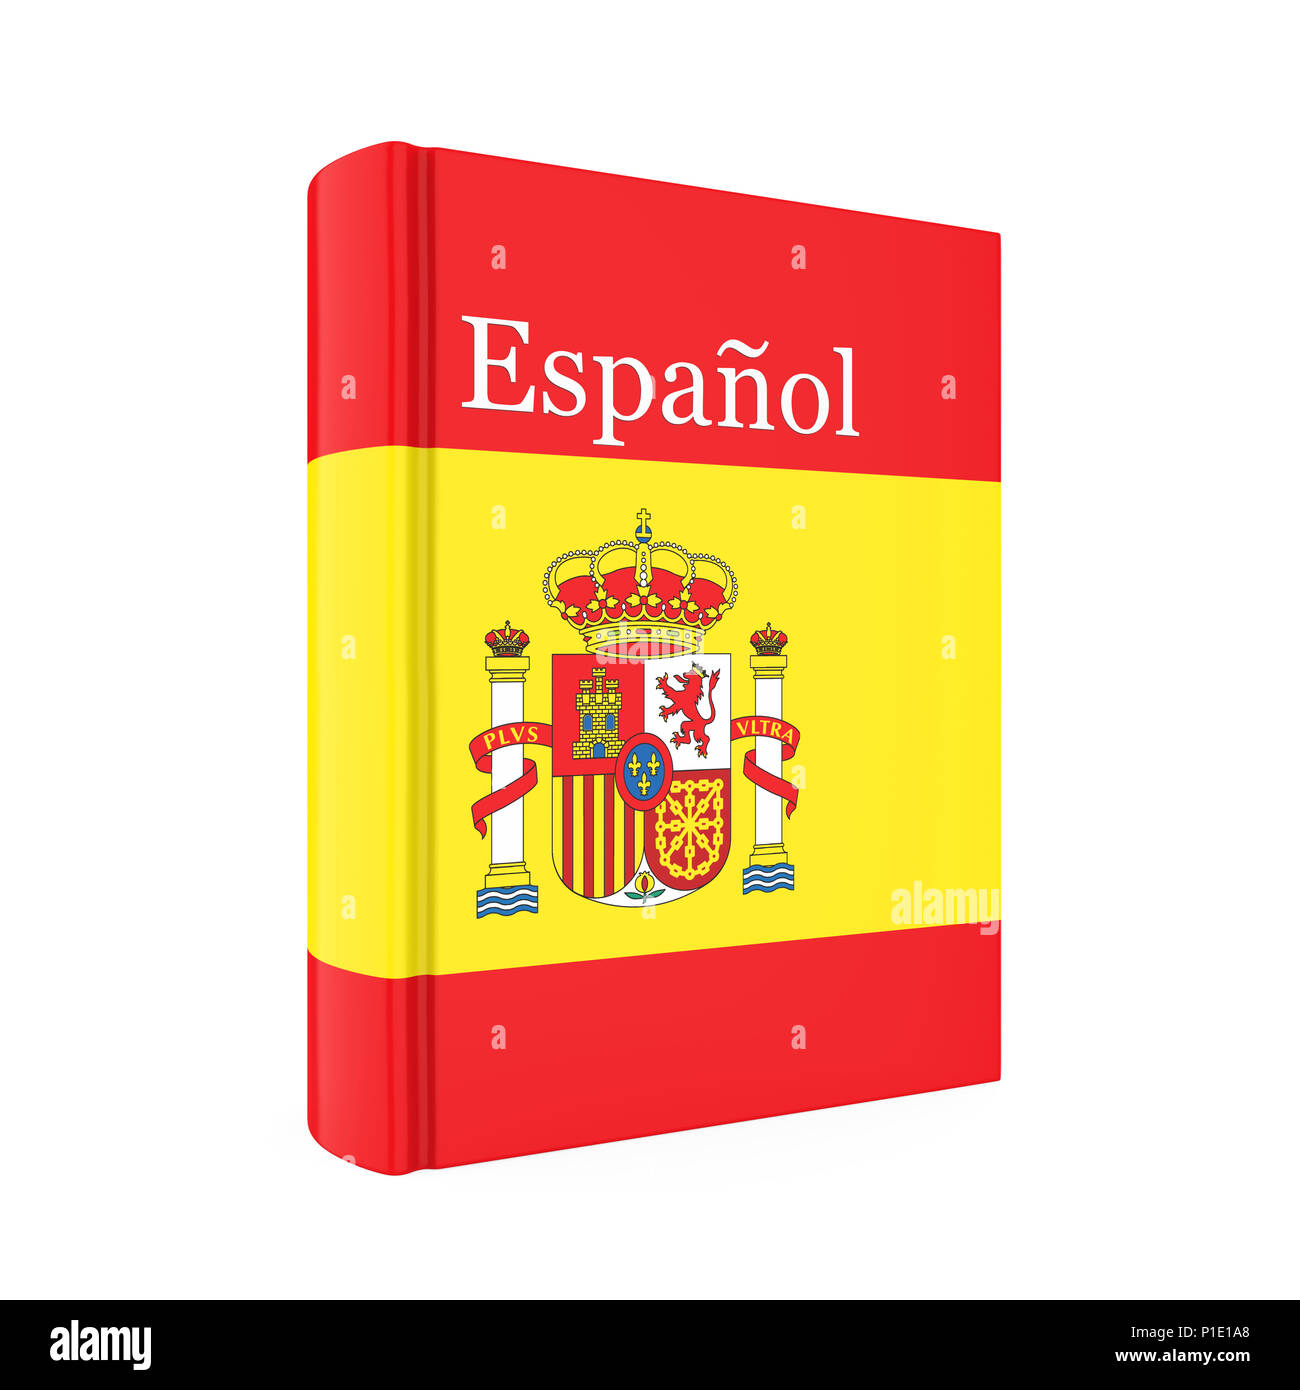 Spanish Dictionary Book Isolated Stock Photo